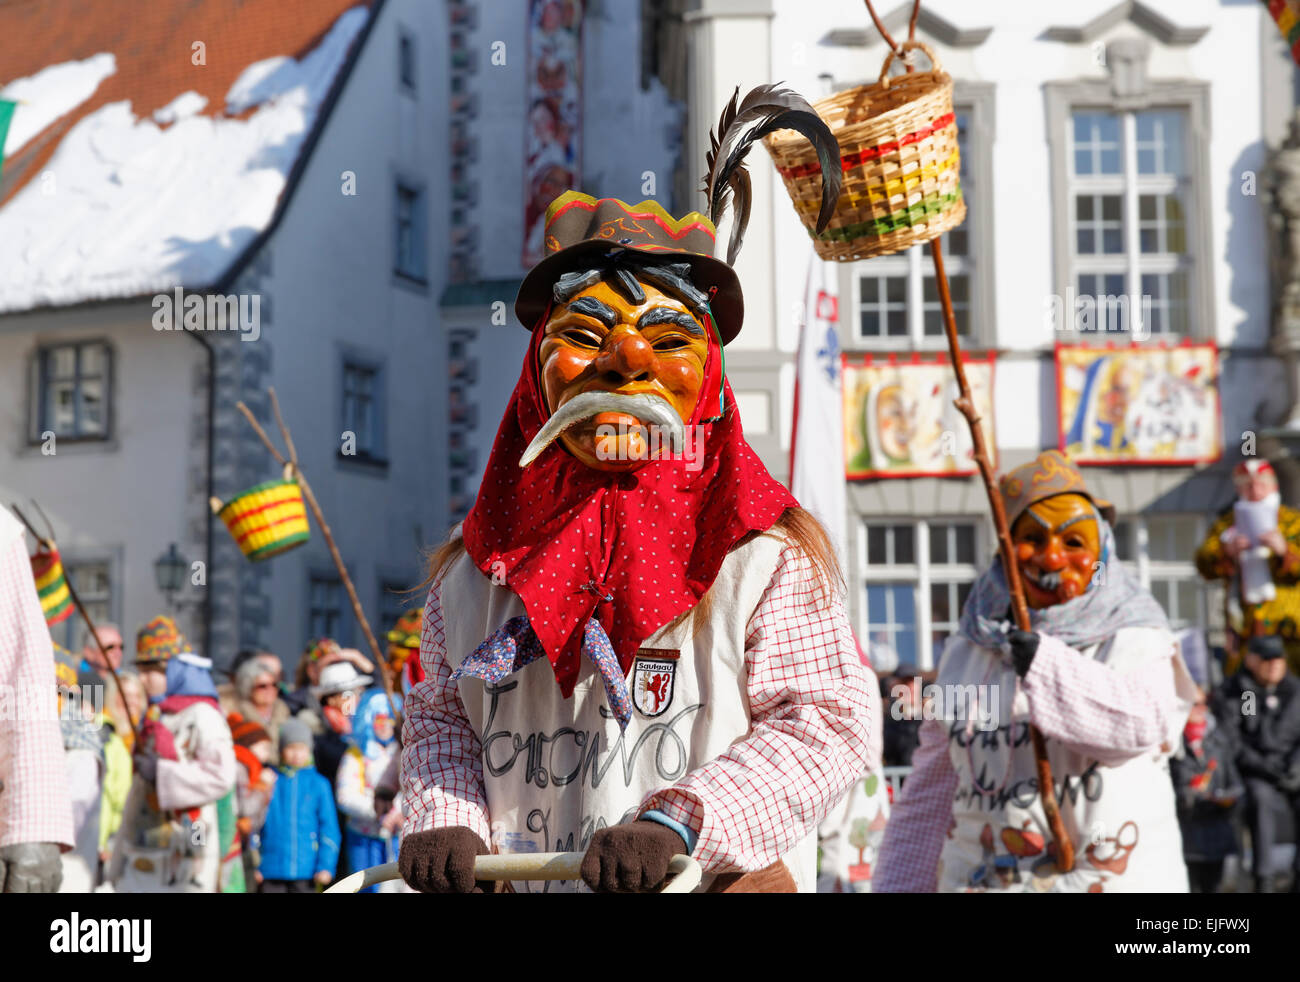 Swabian-Alemannic tradizionale Fastnacht, Narrensprung sfilata di carnevale, Dorausschreier caratteri con maschere in legno Foto Stock